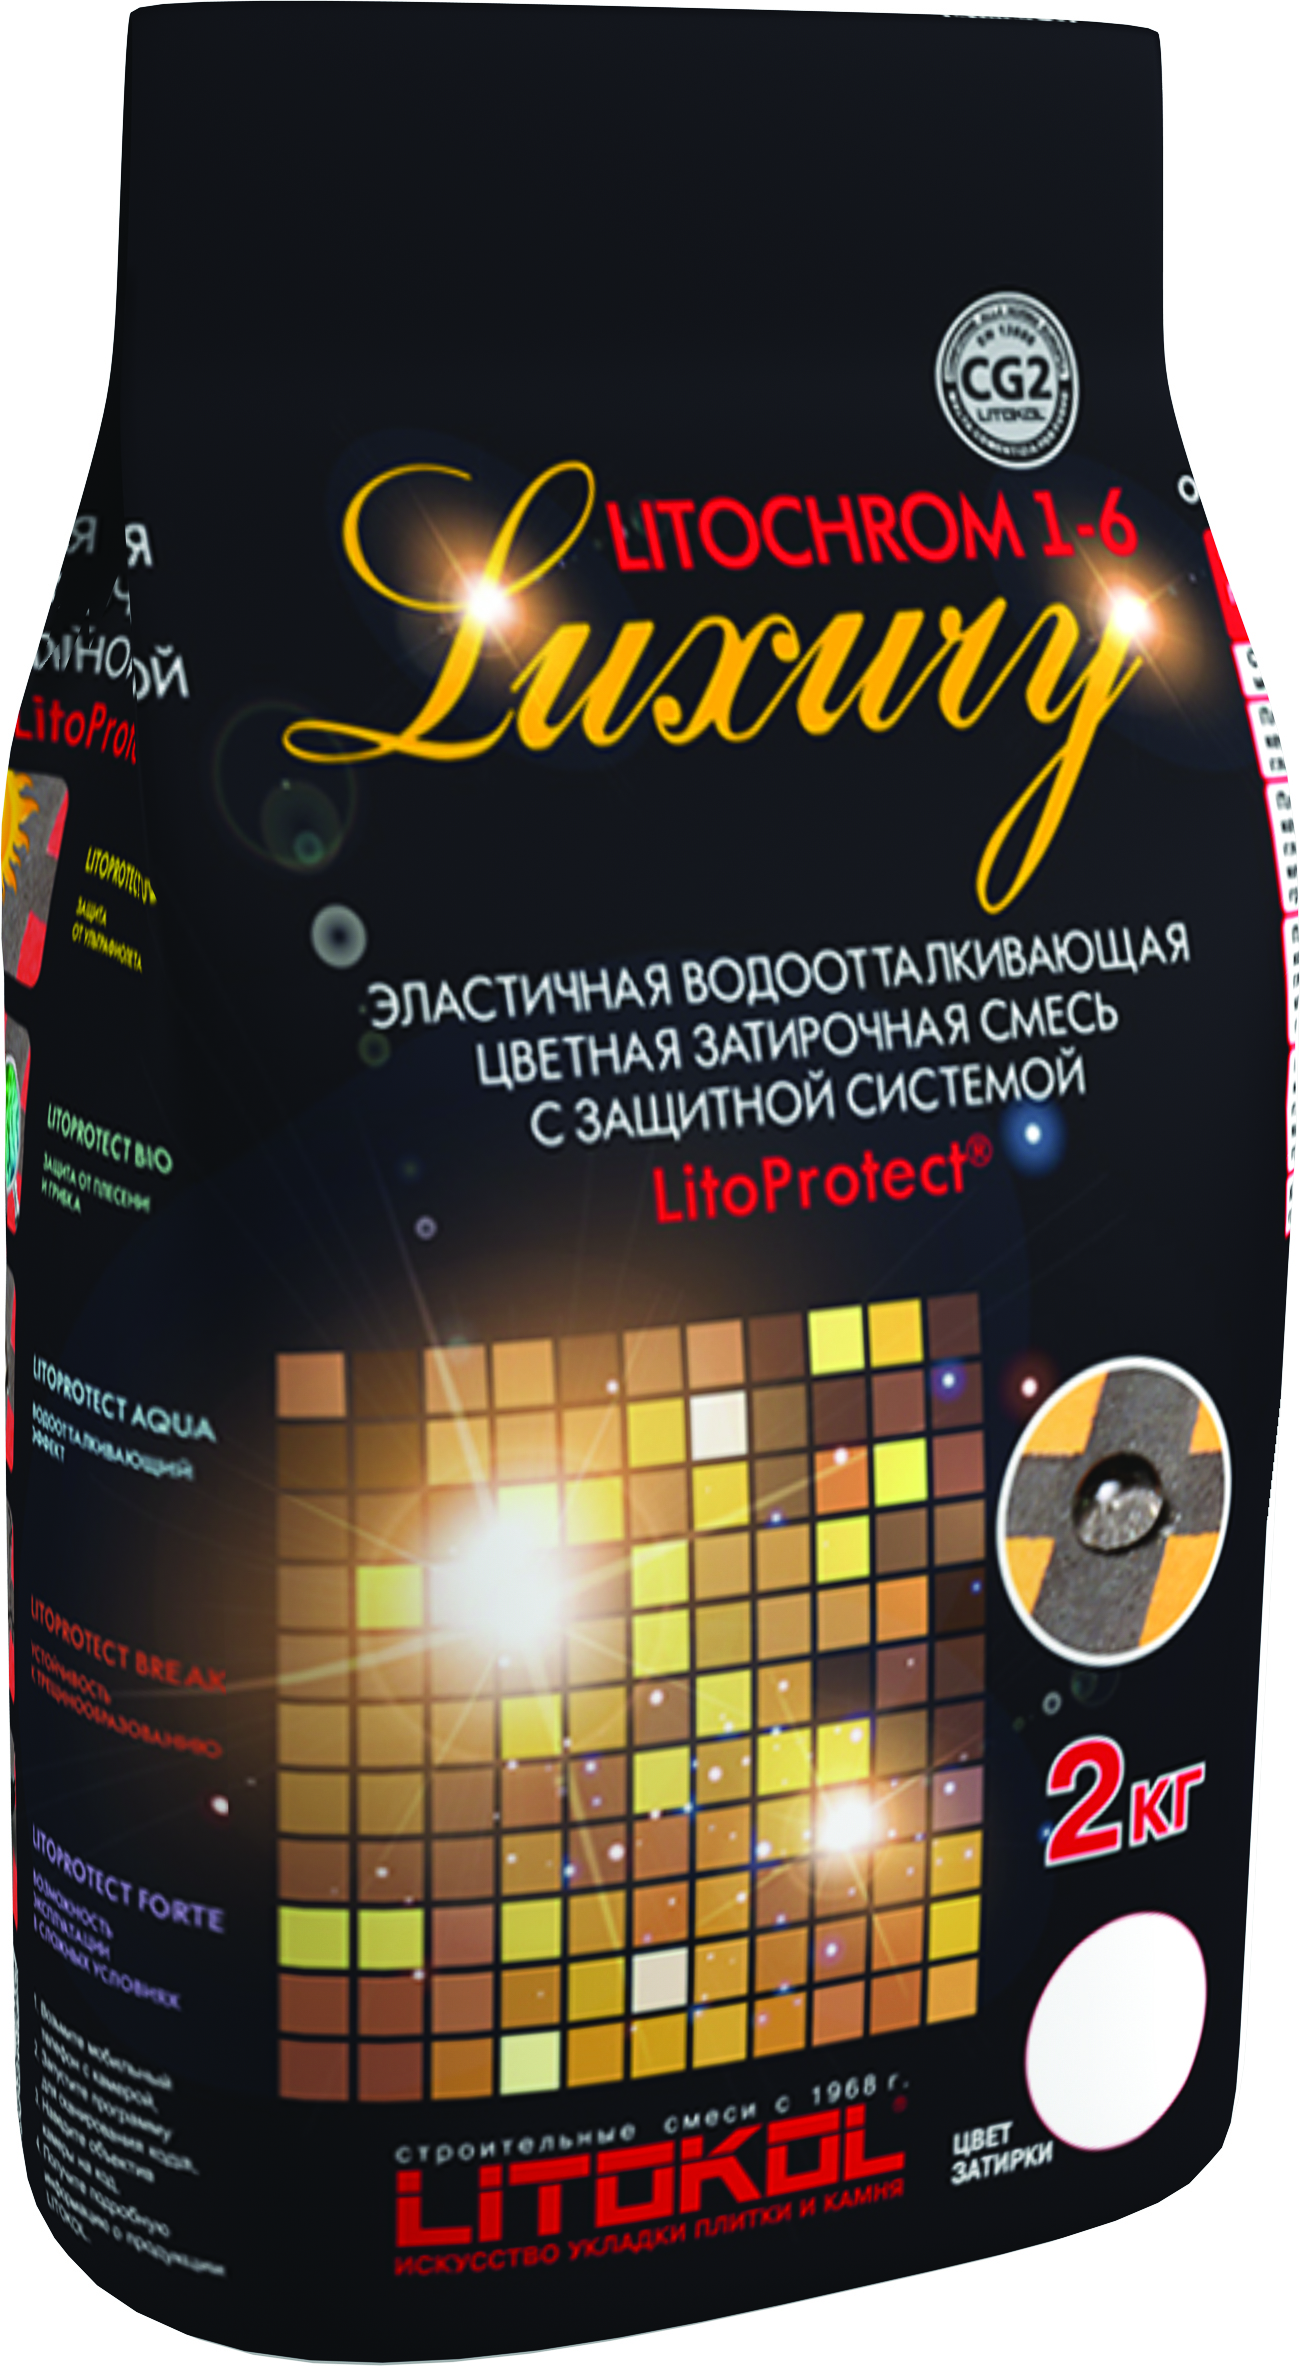 Купить Litokol Litochrom 1-6 Luxury C.60, 2 кг